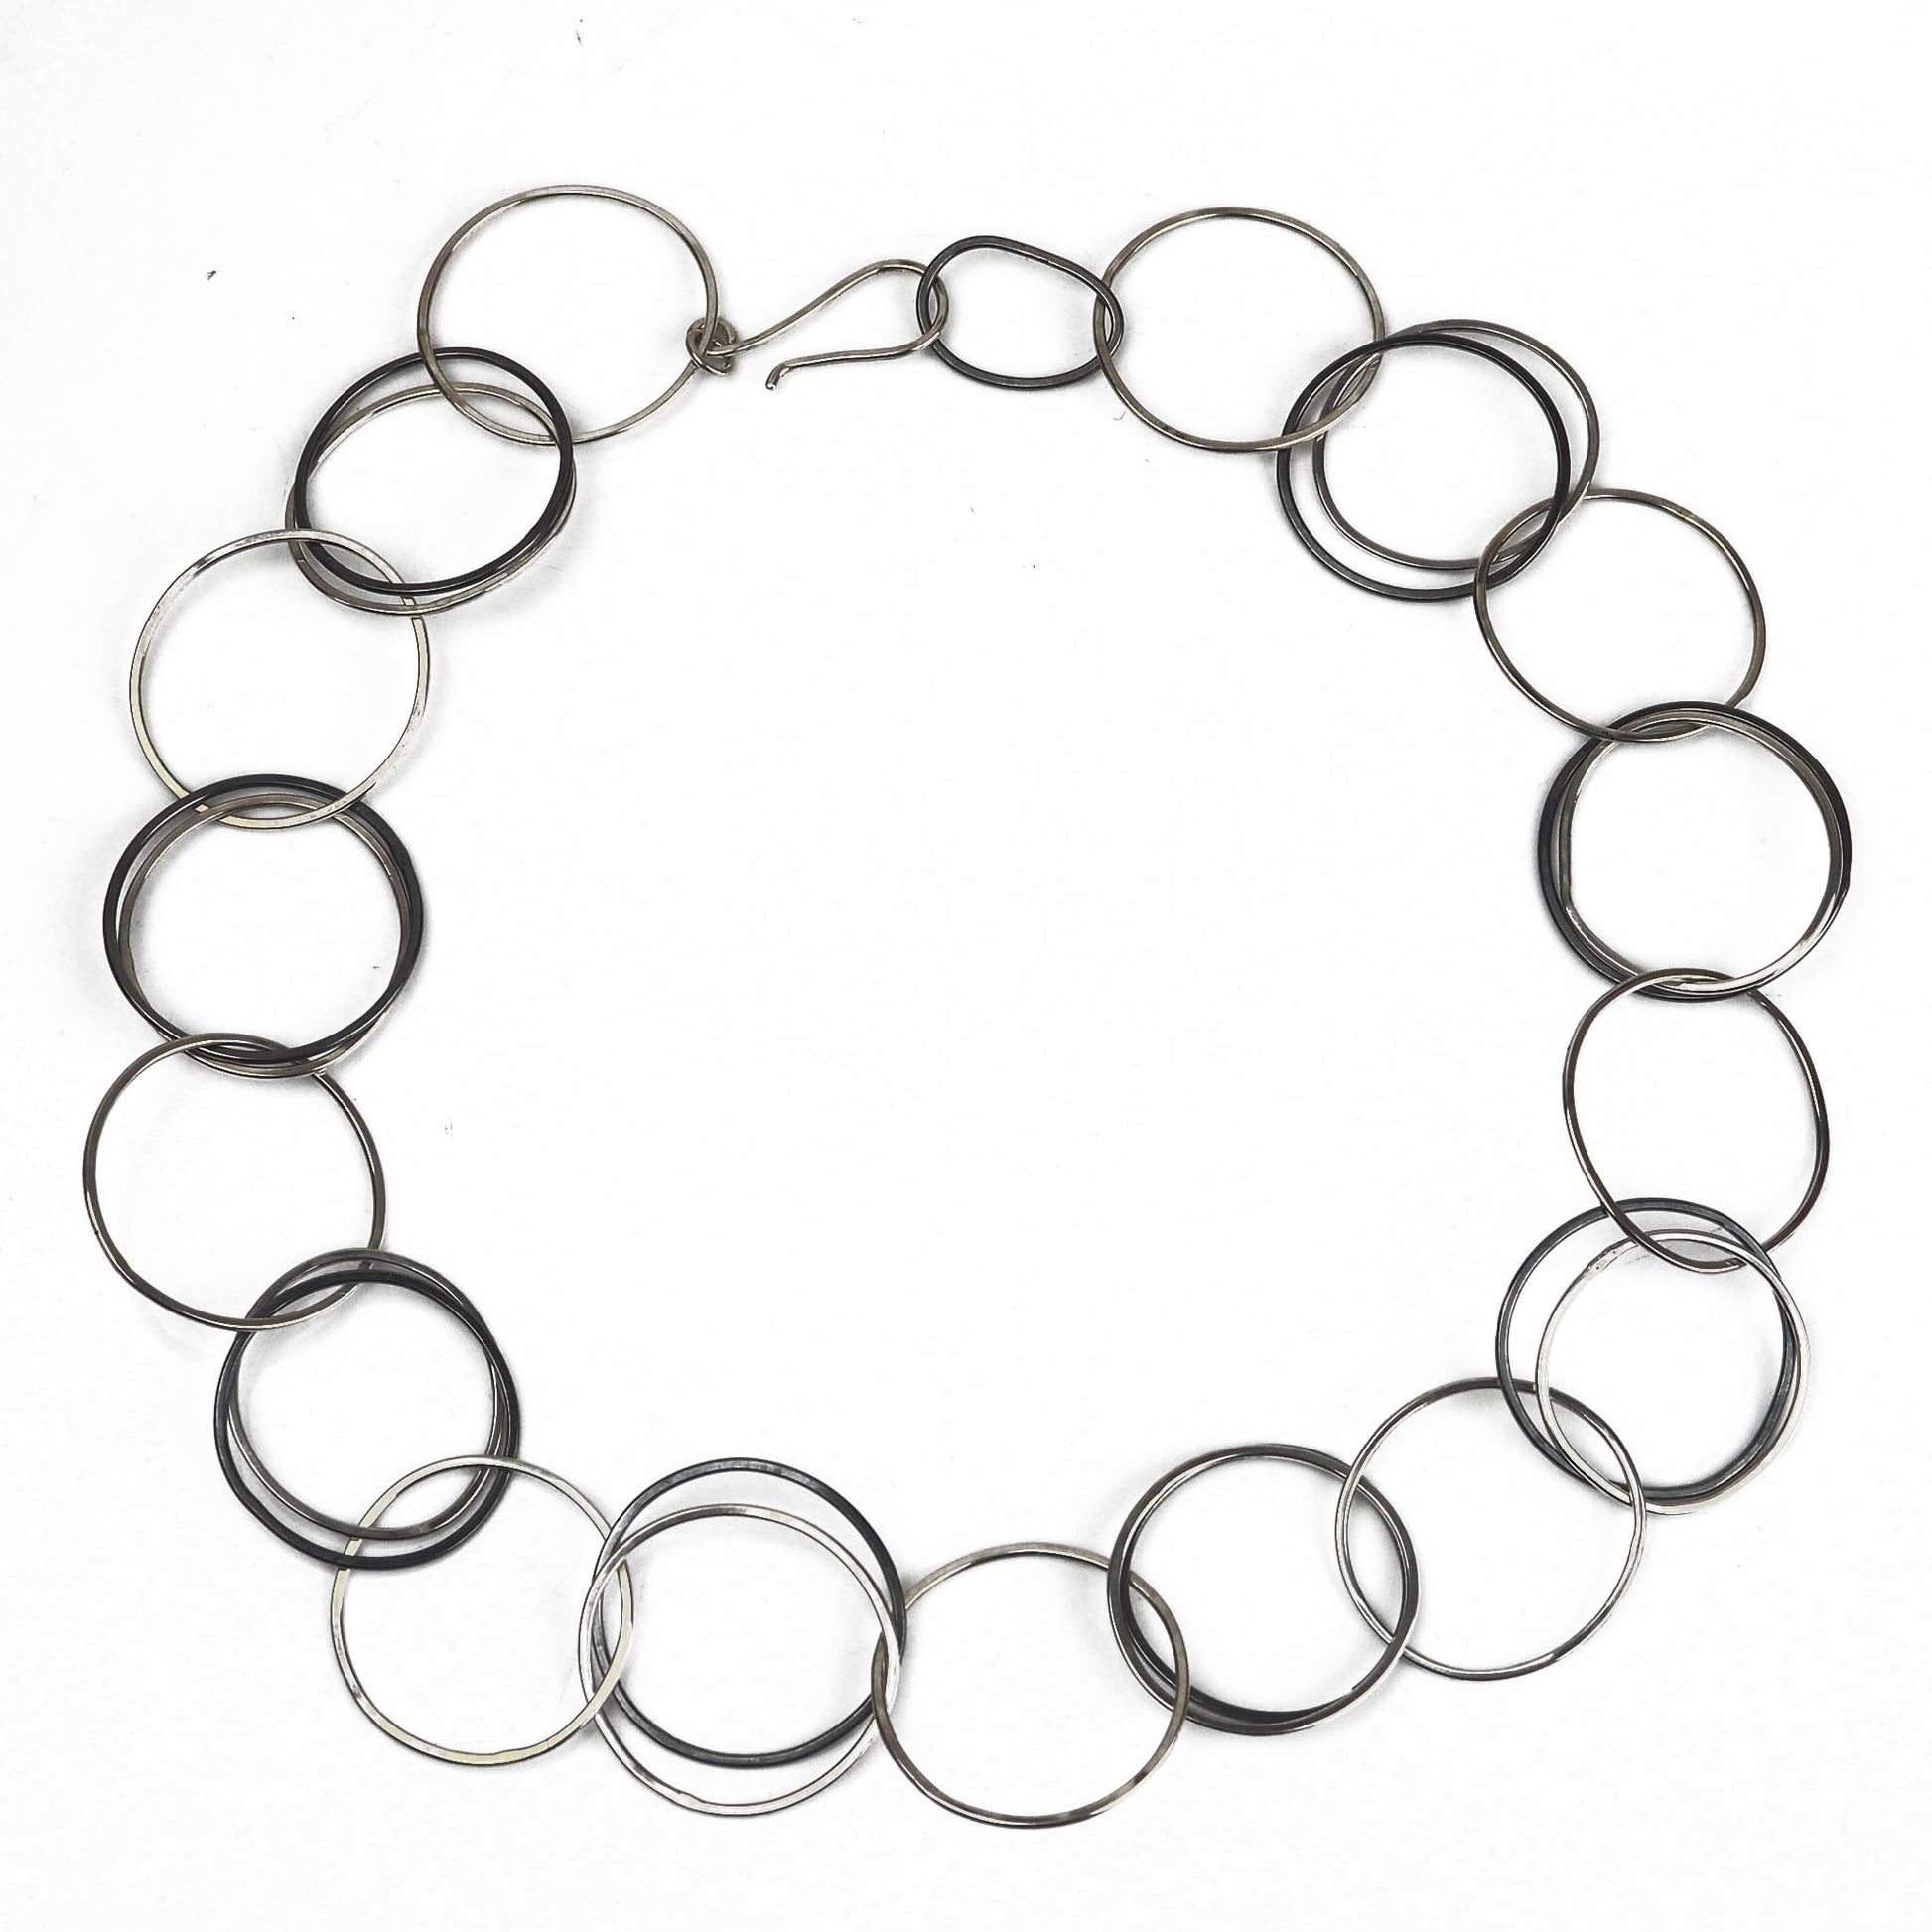 Bruun, Birgitte – Hammered Silver Necklace | Birgitte Bruun | Primavera Gallery